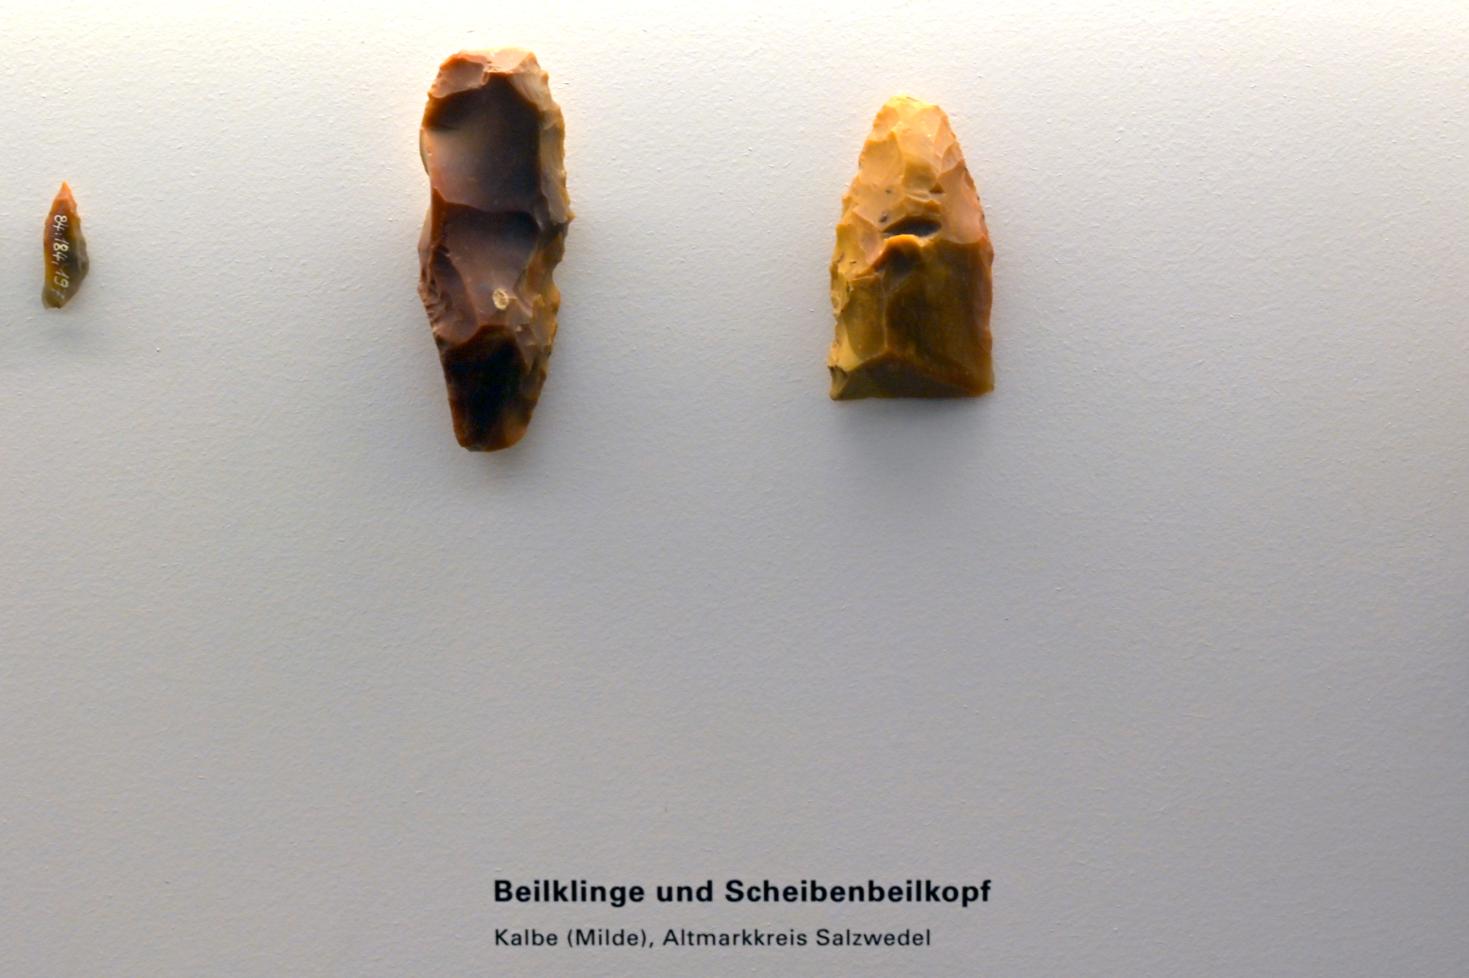 Scheibenbeilkopf, Mesolithikum, 9500 - 5500 v. Chr.